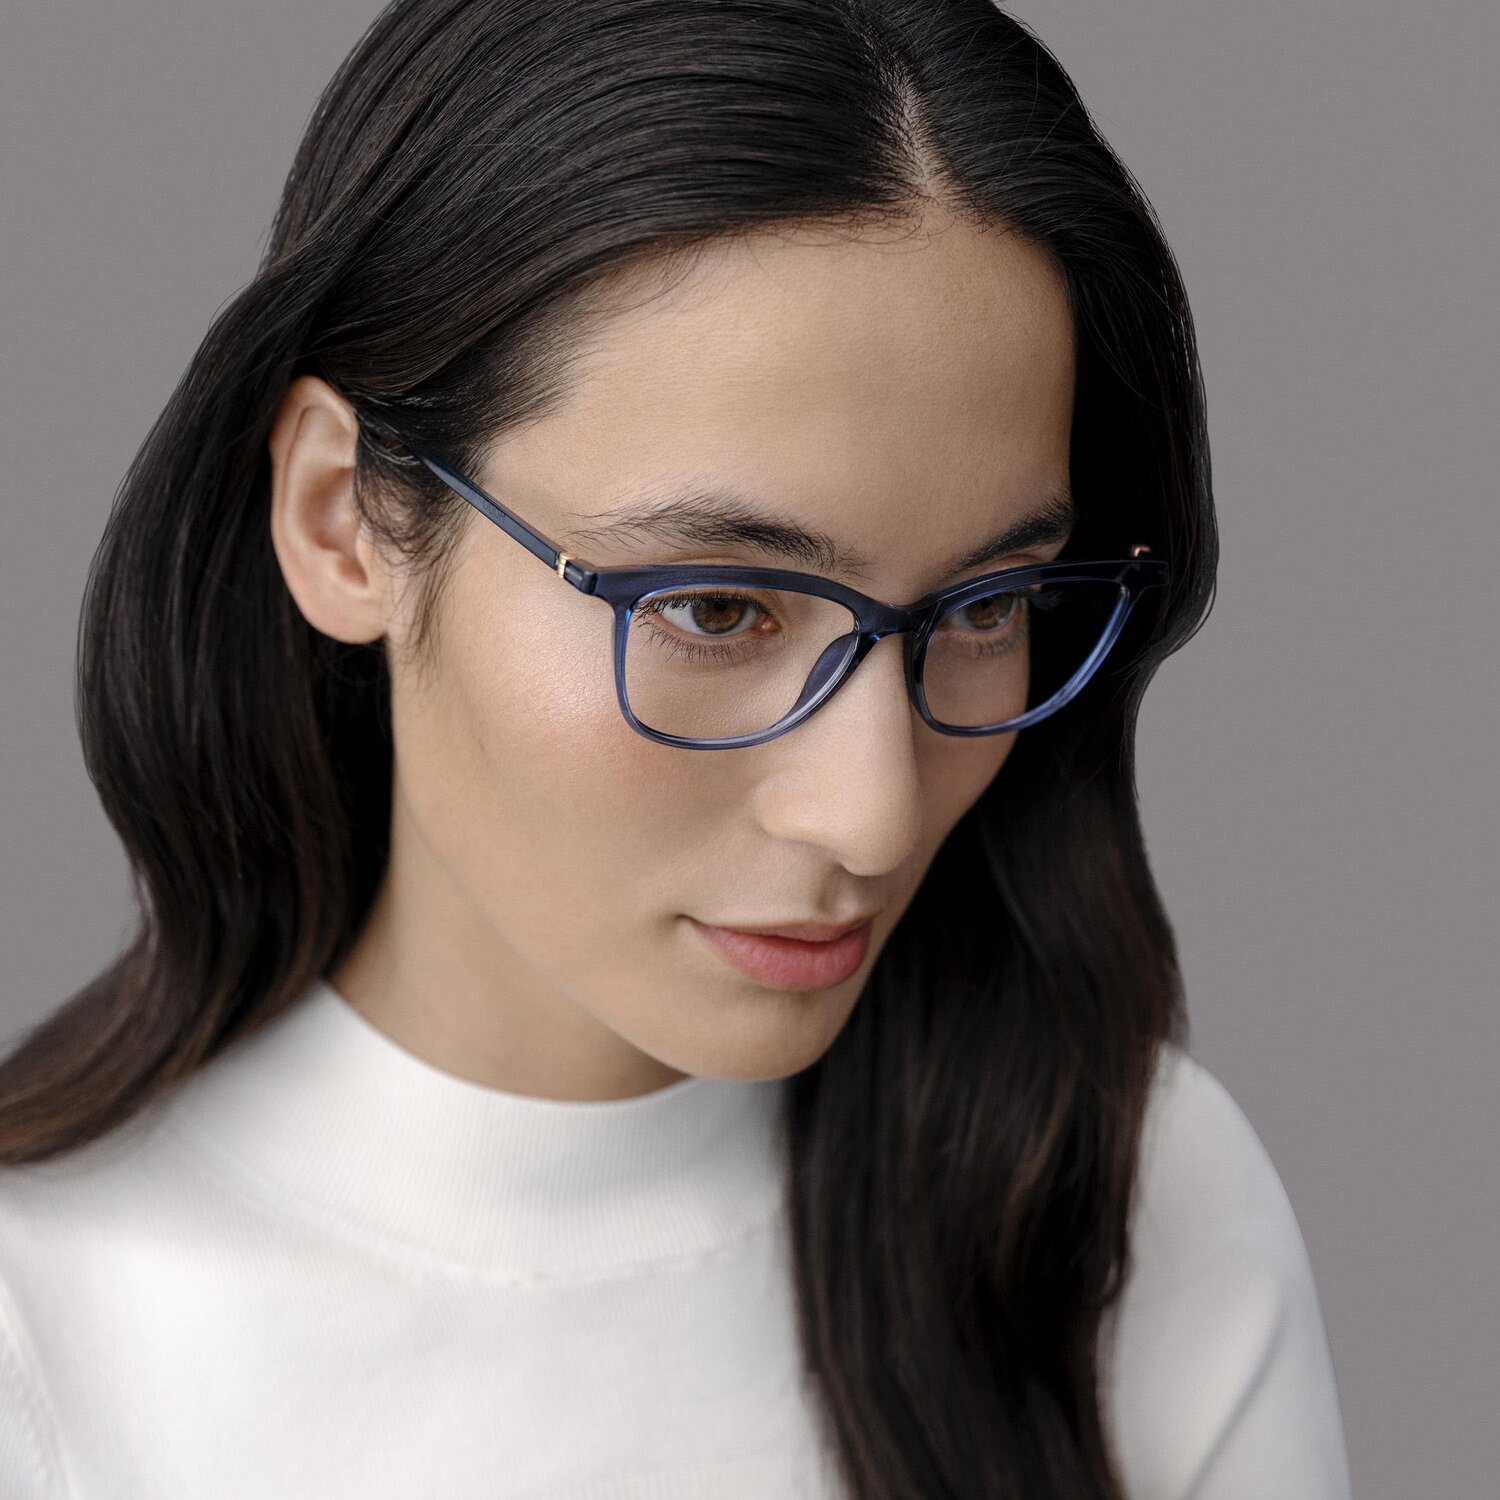 Modo — Eye doctors – eyeglasses, contact lenses, vision and eye exams